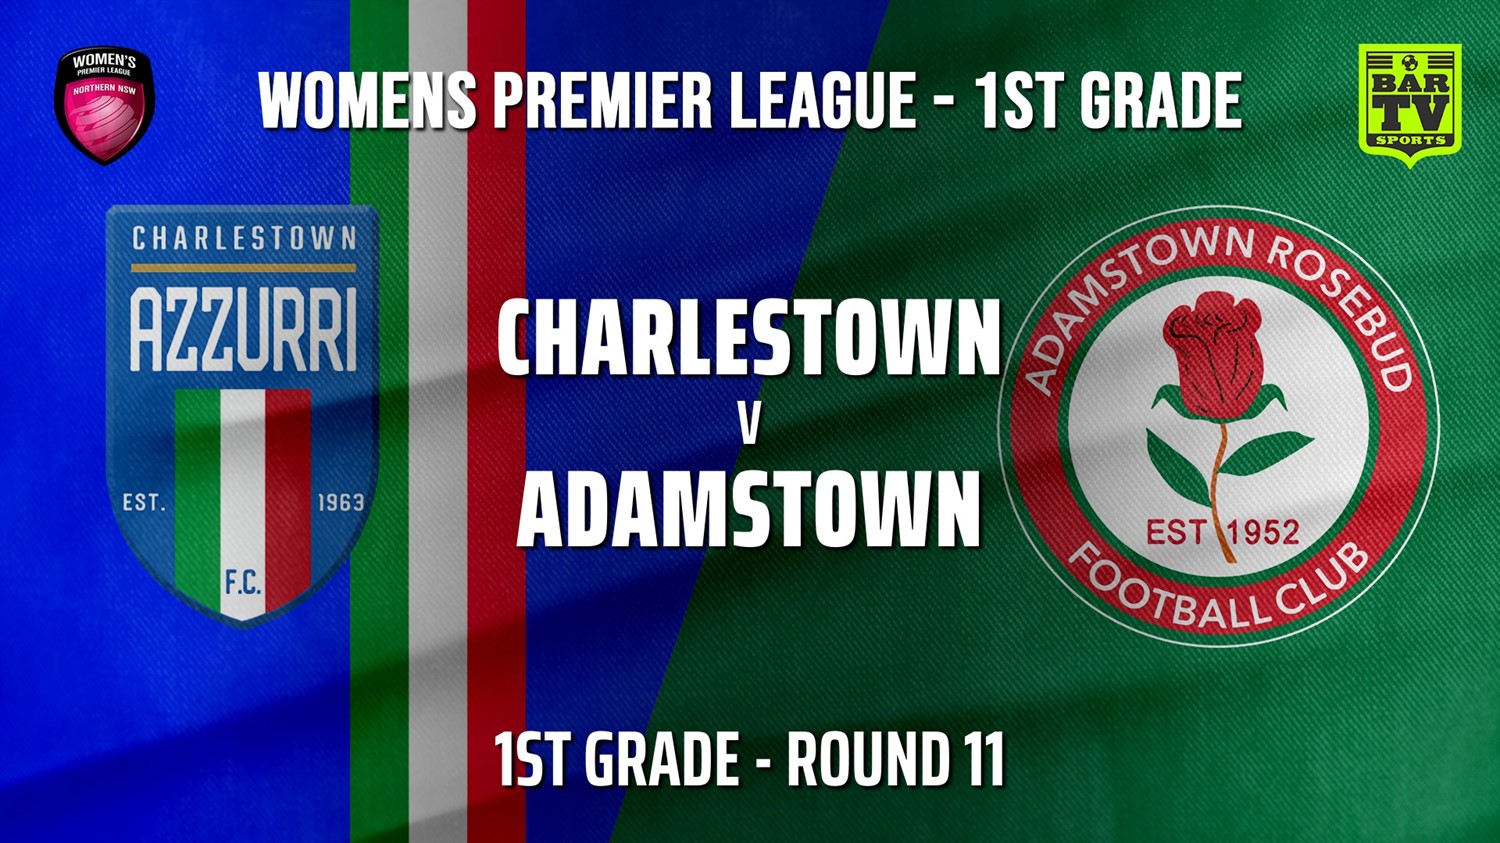 210614-Northern Womens Round 11 - 1st Grade - Charlestown Azzurri FC (women) v Adamstown Women Minigame Slate Image